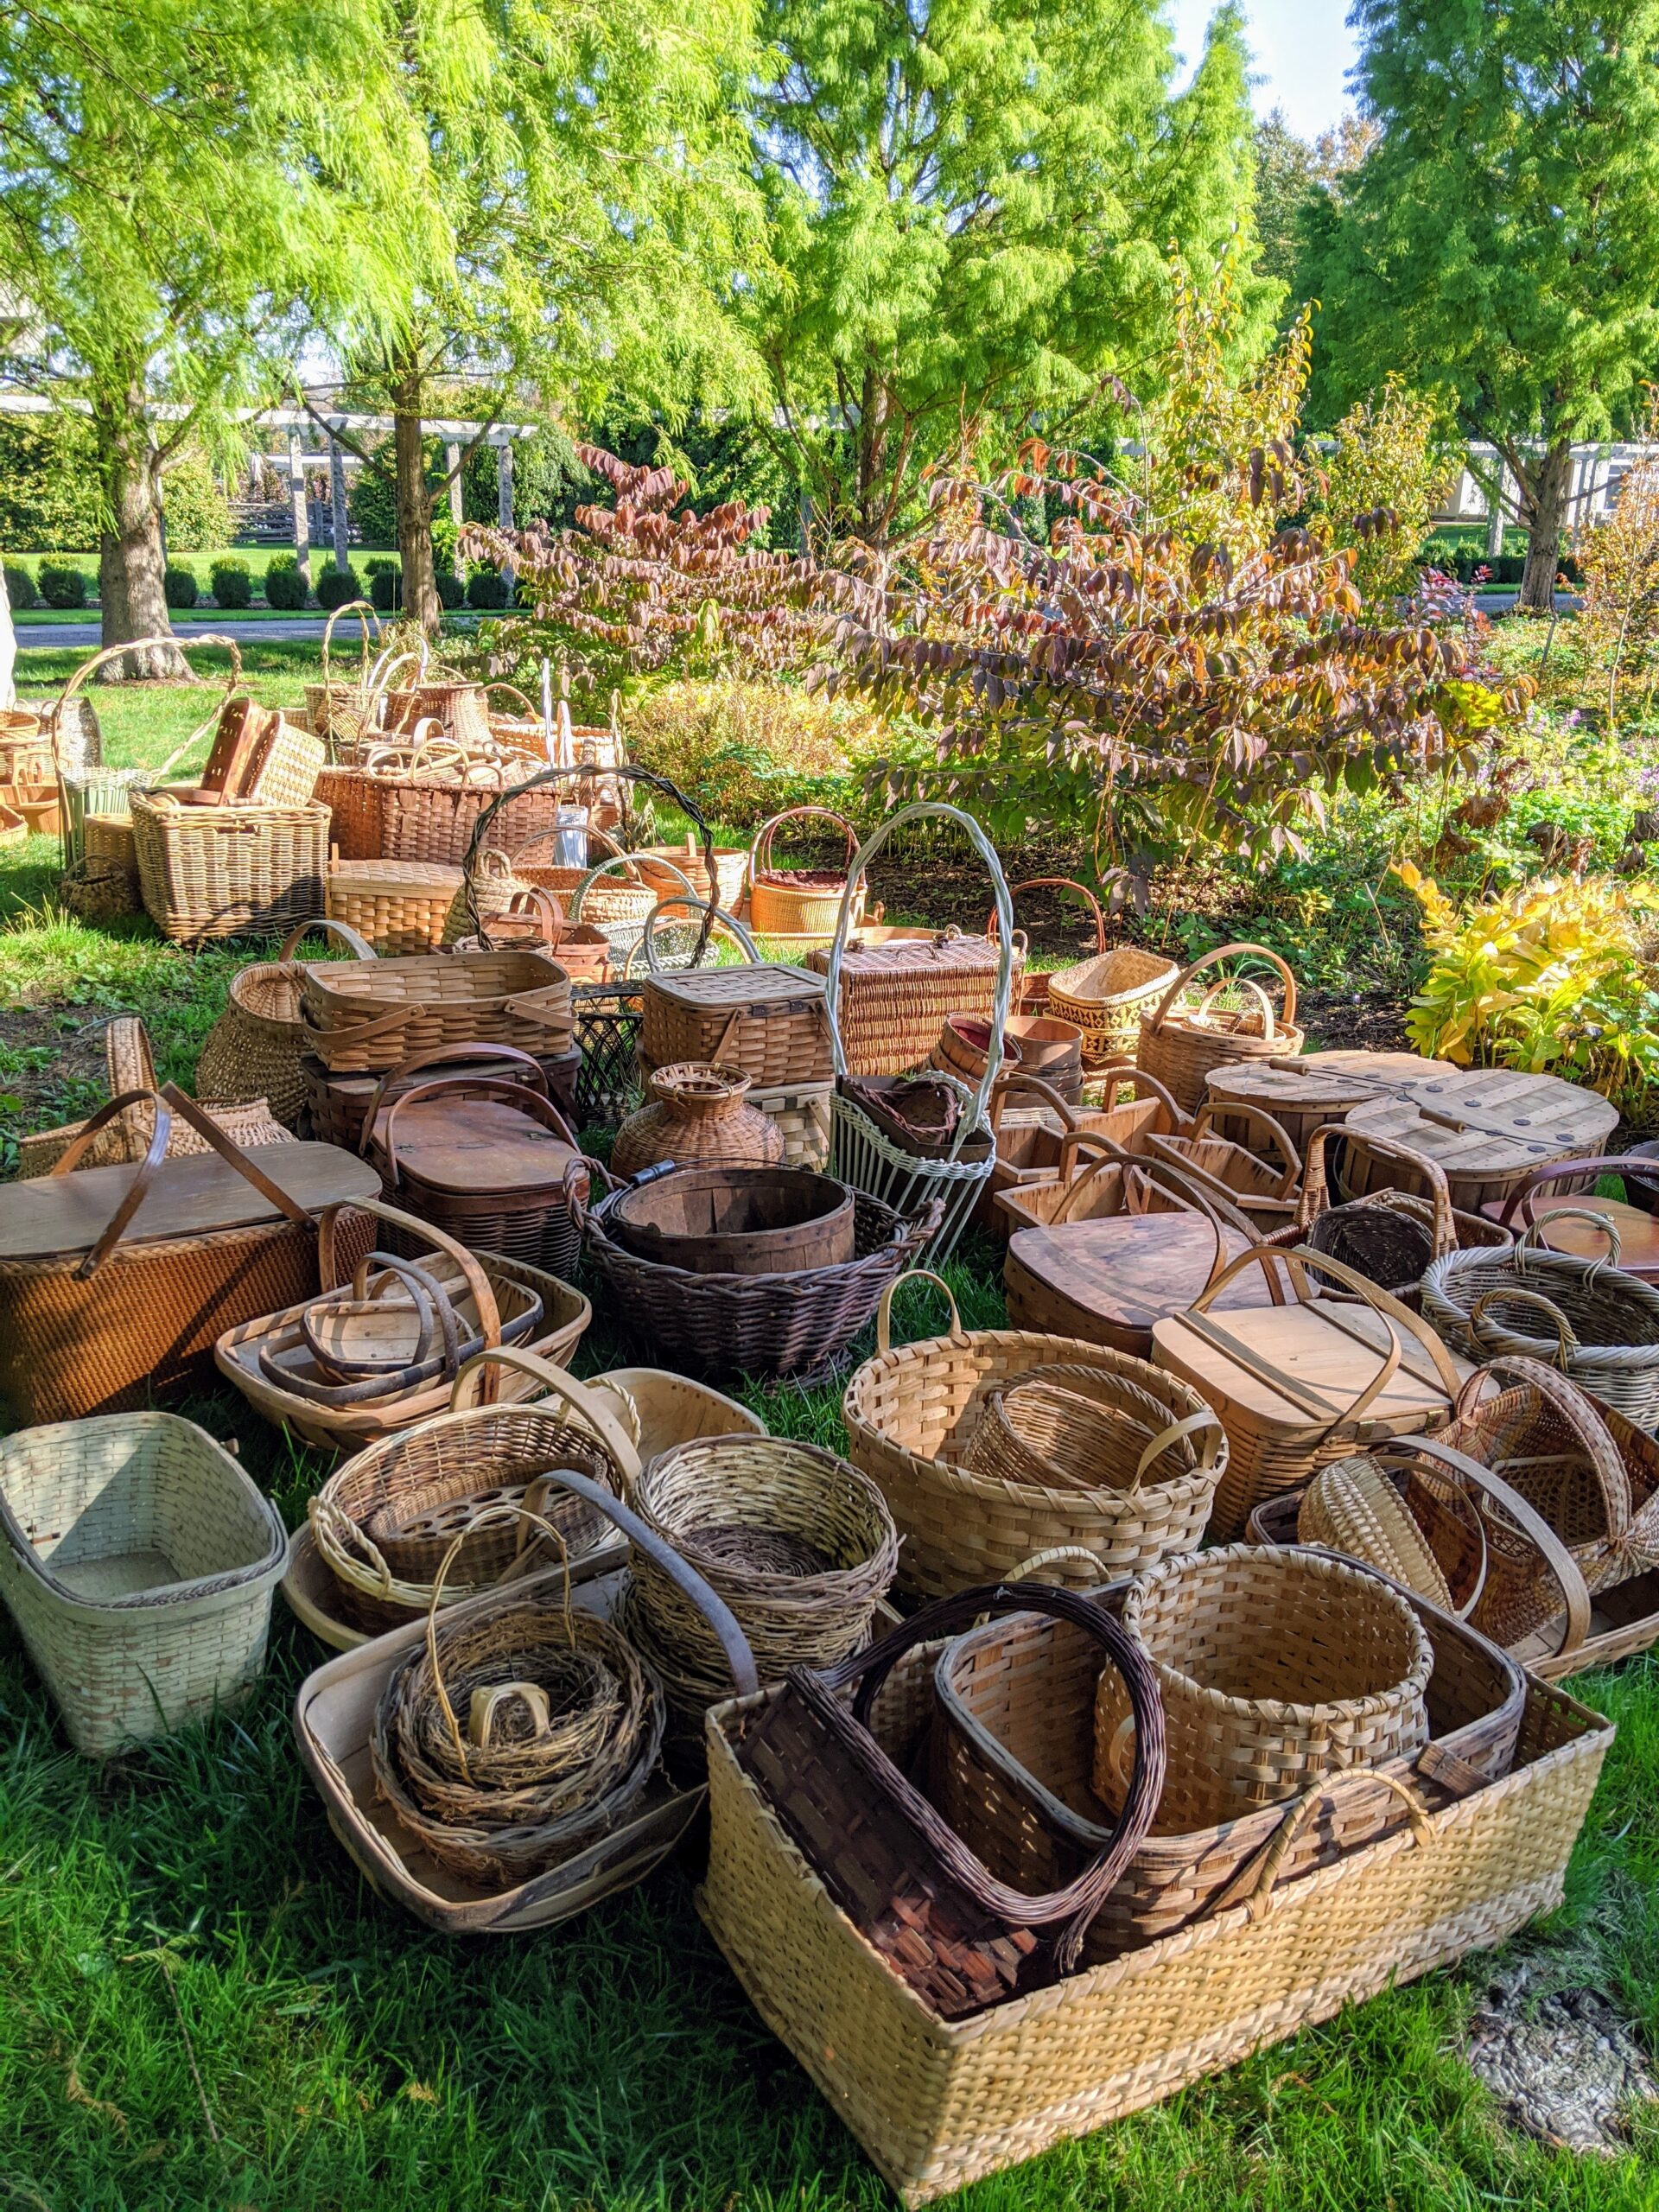 Basket weaving supplies - arts & crafts - by owner - sale - craigslist